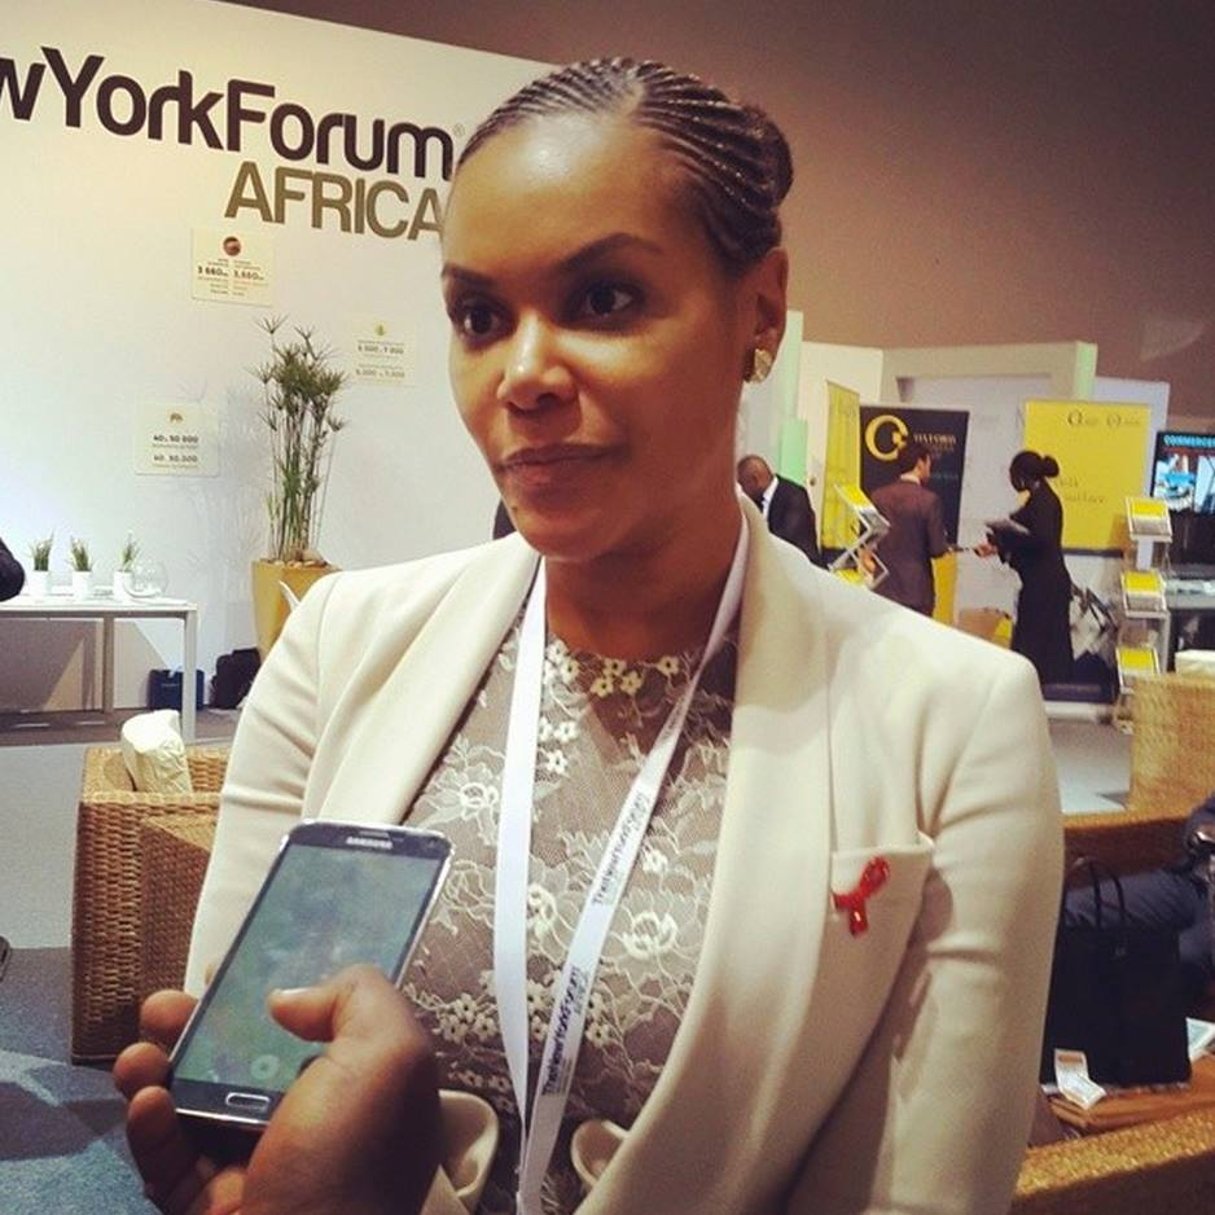 Malika Dossou Bongo Ondimba, lors du New York Forum Africa 2016. © Facebook/Malika Dossou Bongo Ondimba